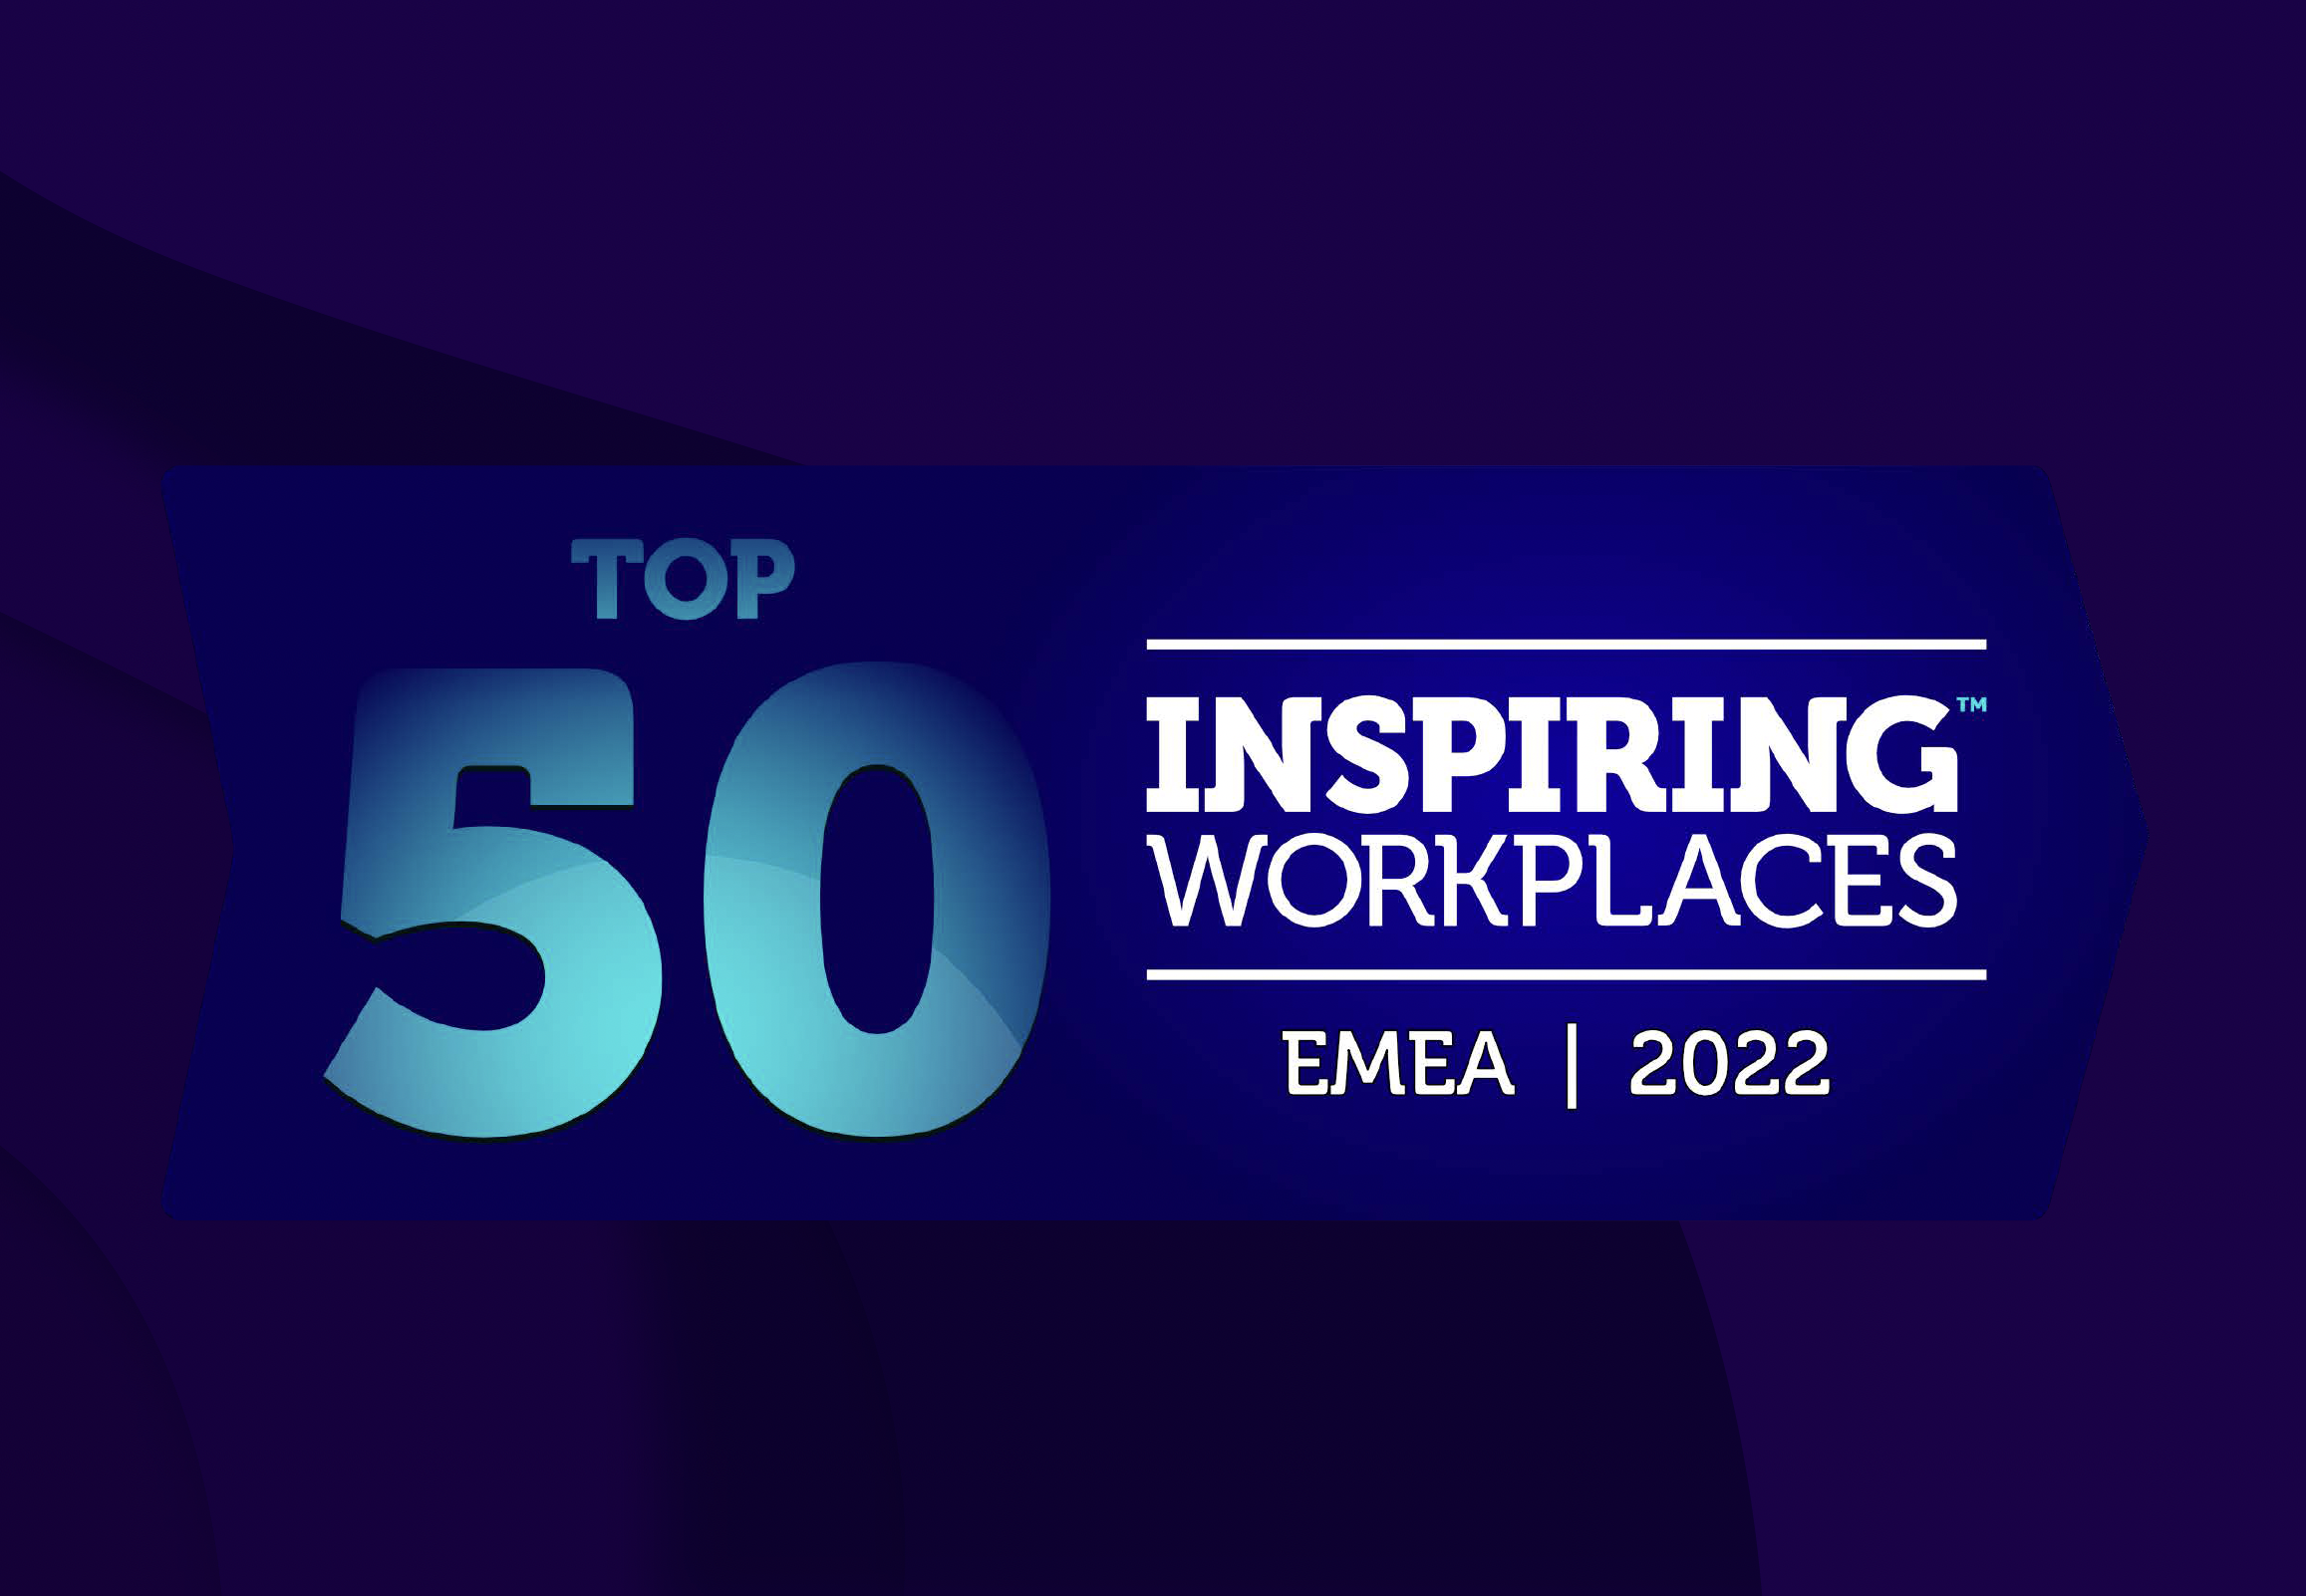 Top 50 Inspiring Workplaces across EMEA announced